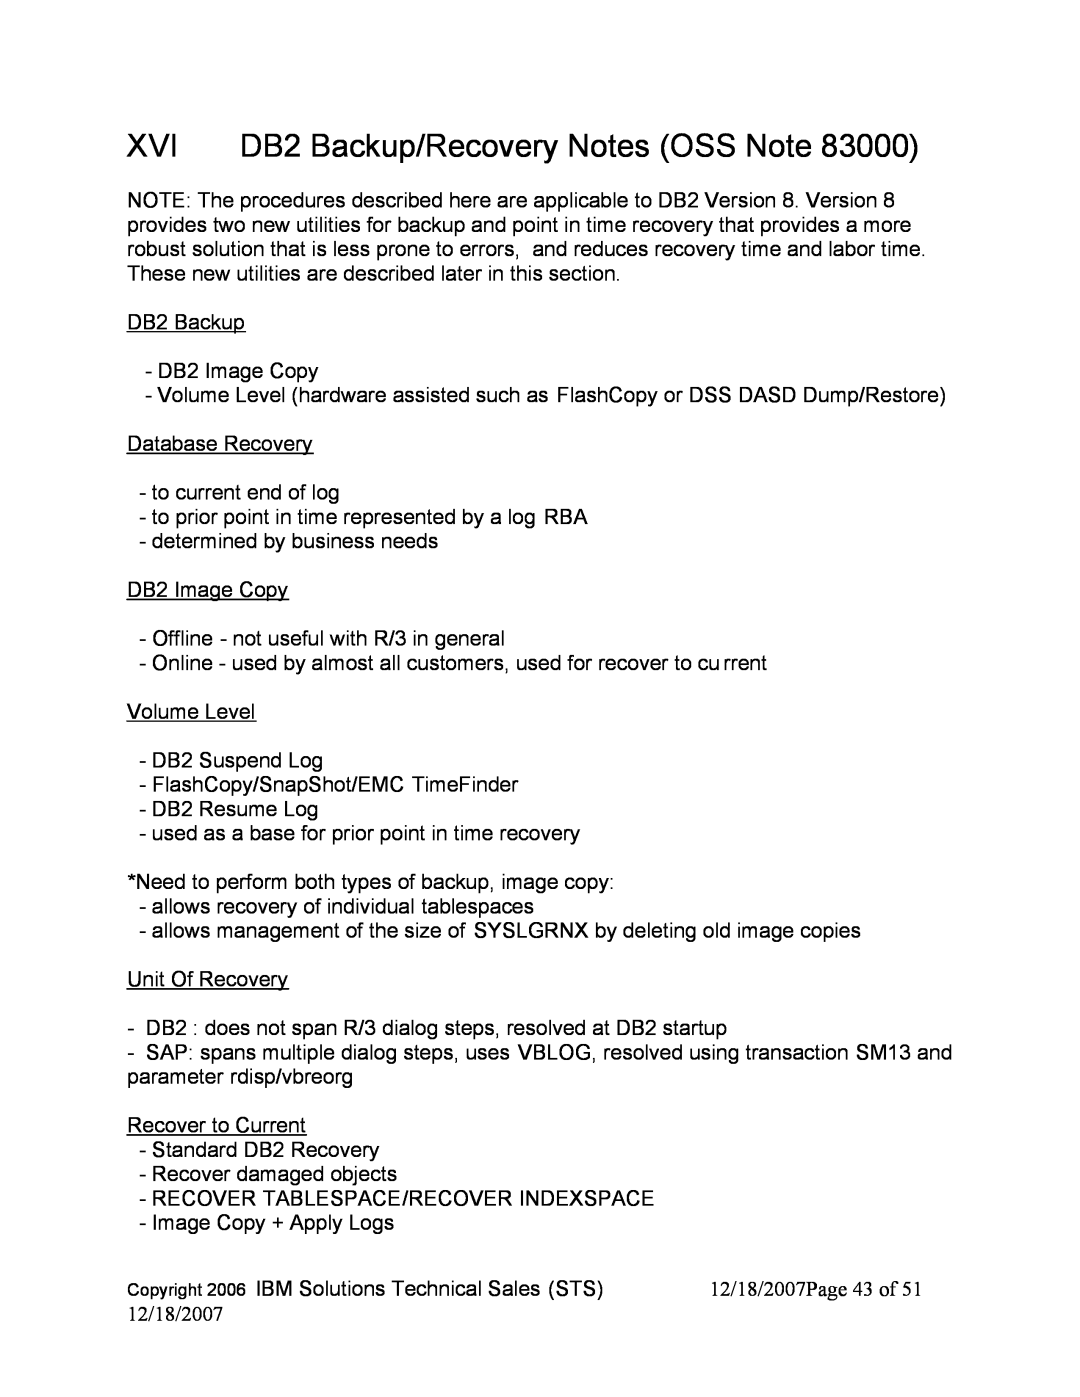 IBM DB2 V8, DB2 9 manual DB2 Backup/Recovery Notes OSS Note 